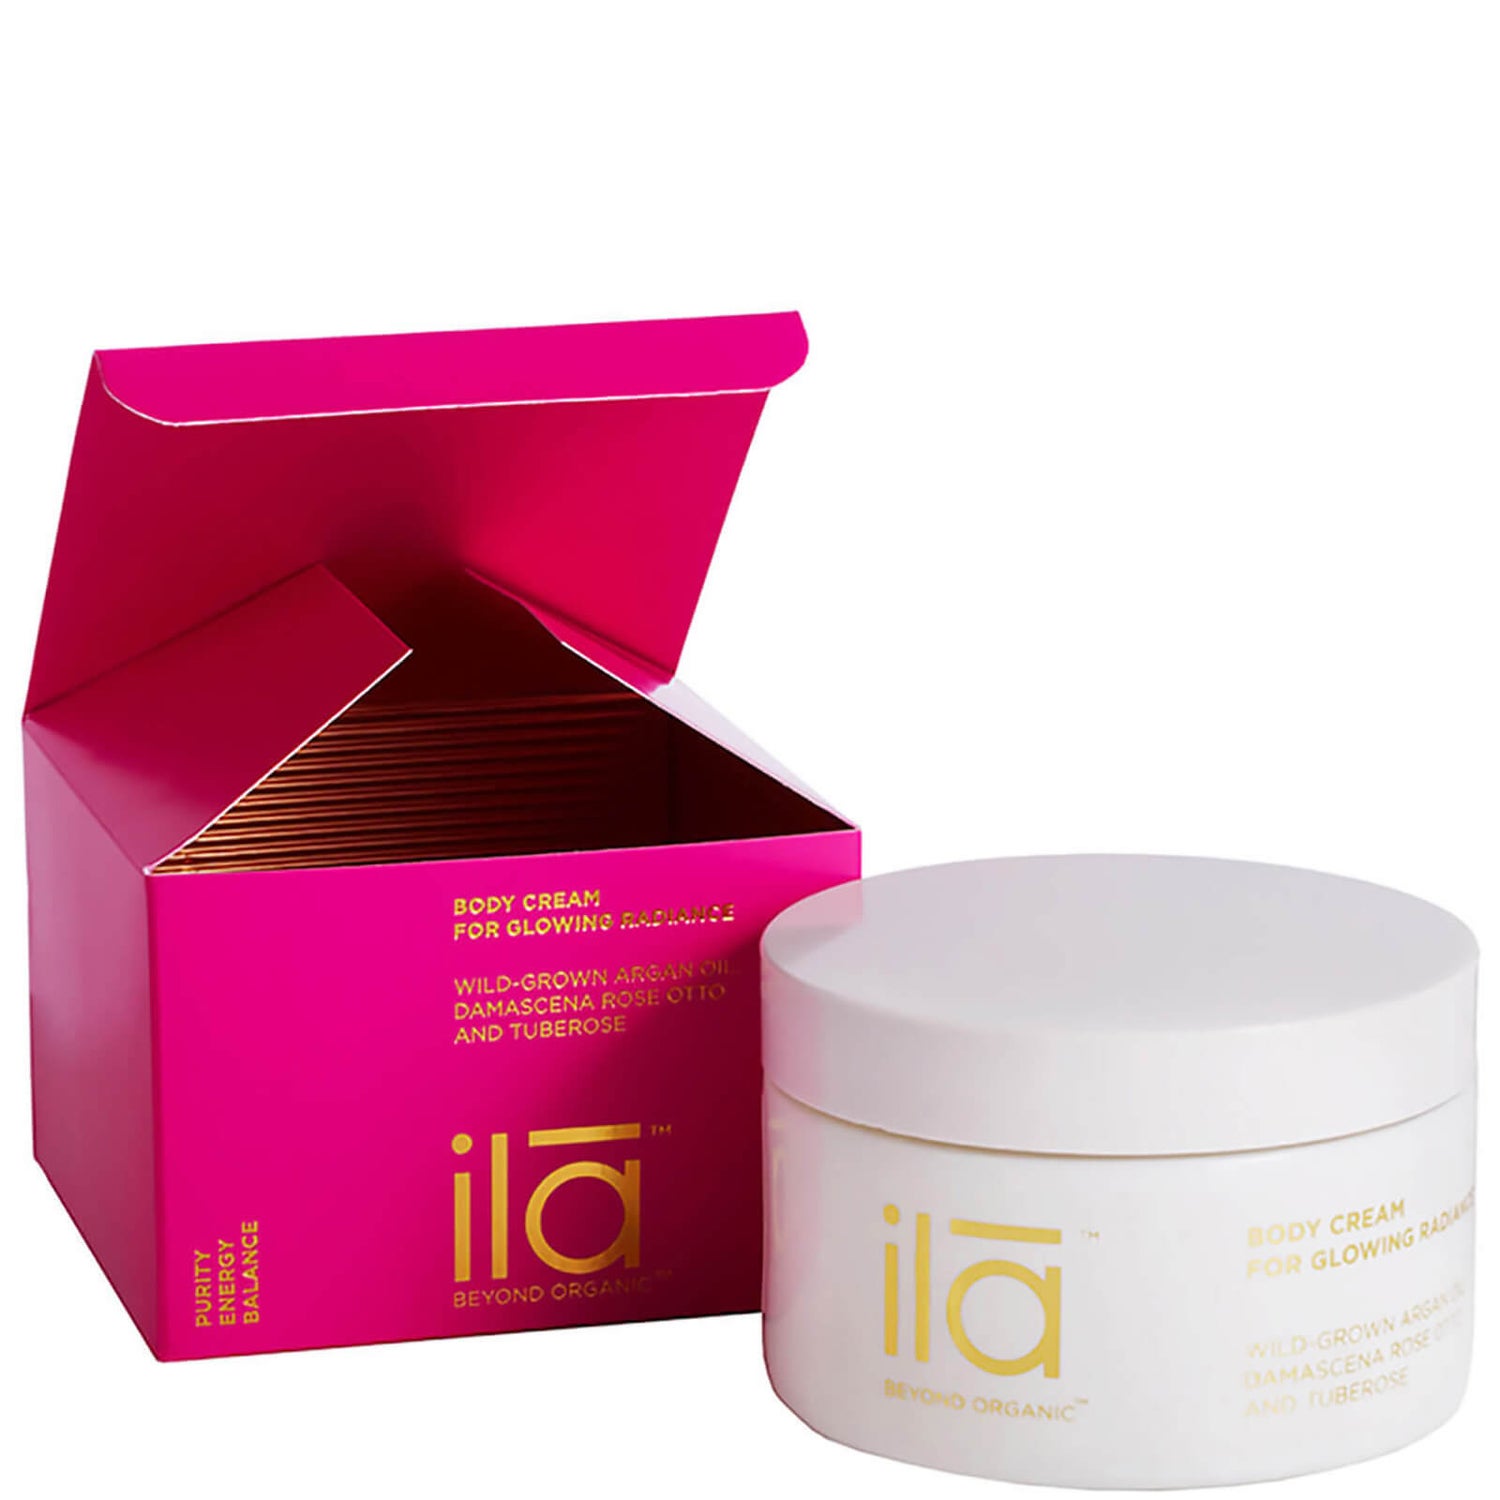 ila-spa Body Cream for Glowing Radiance 200g